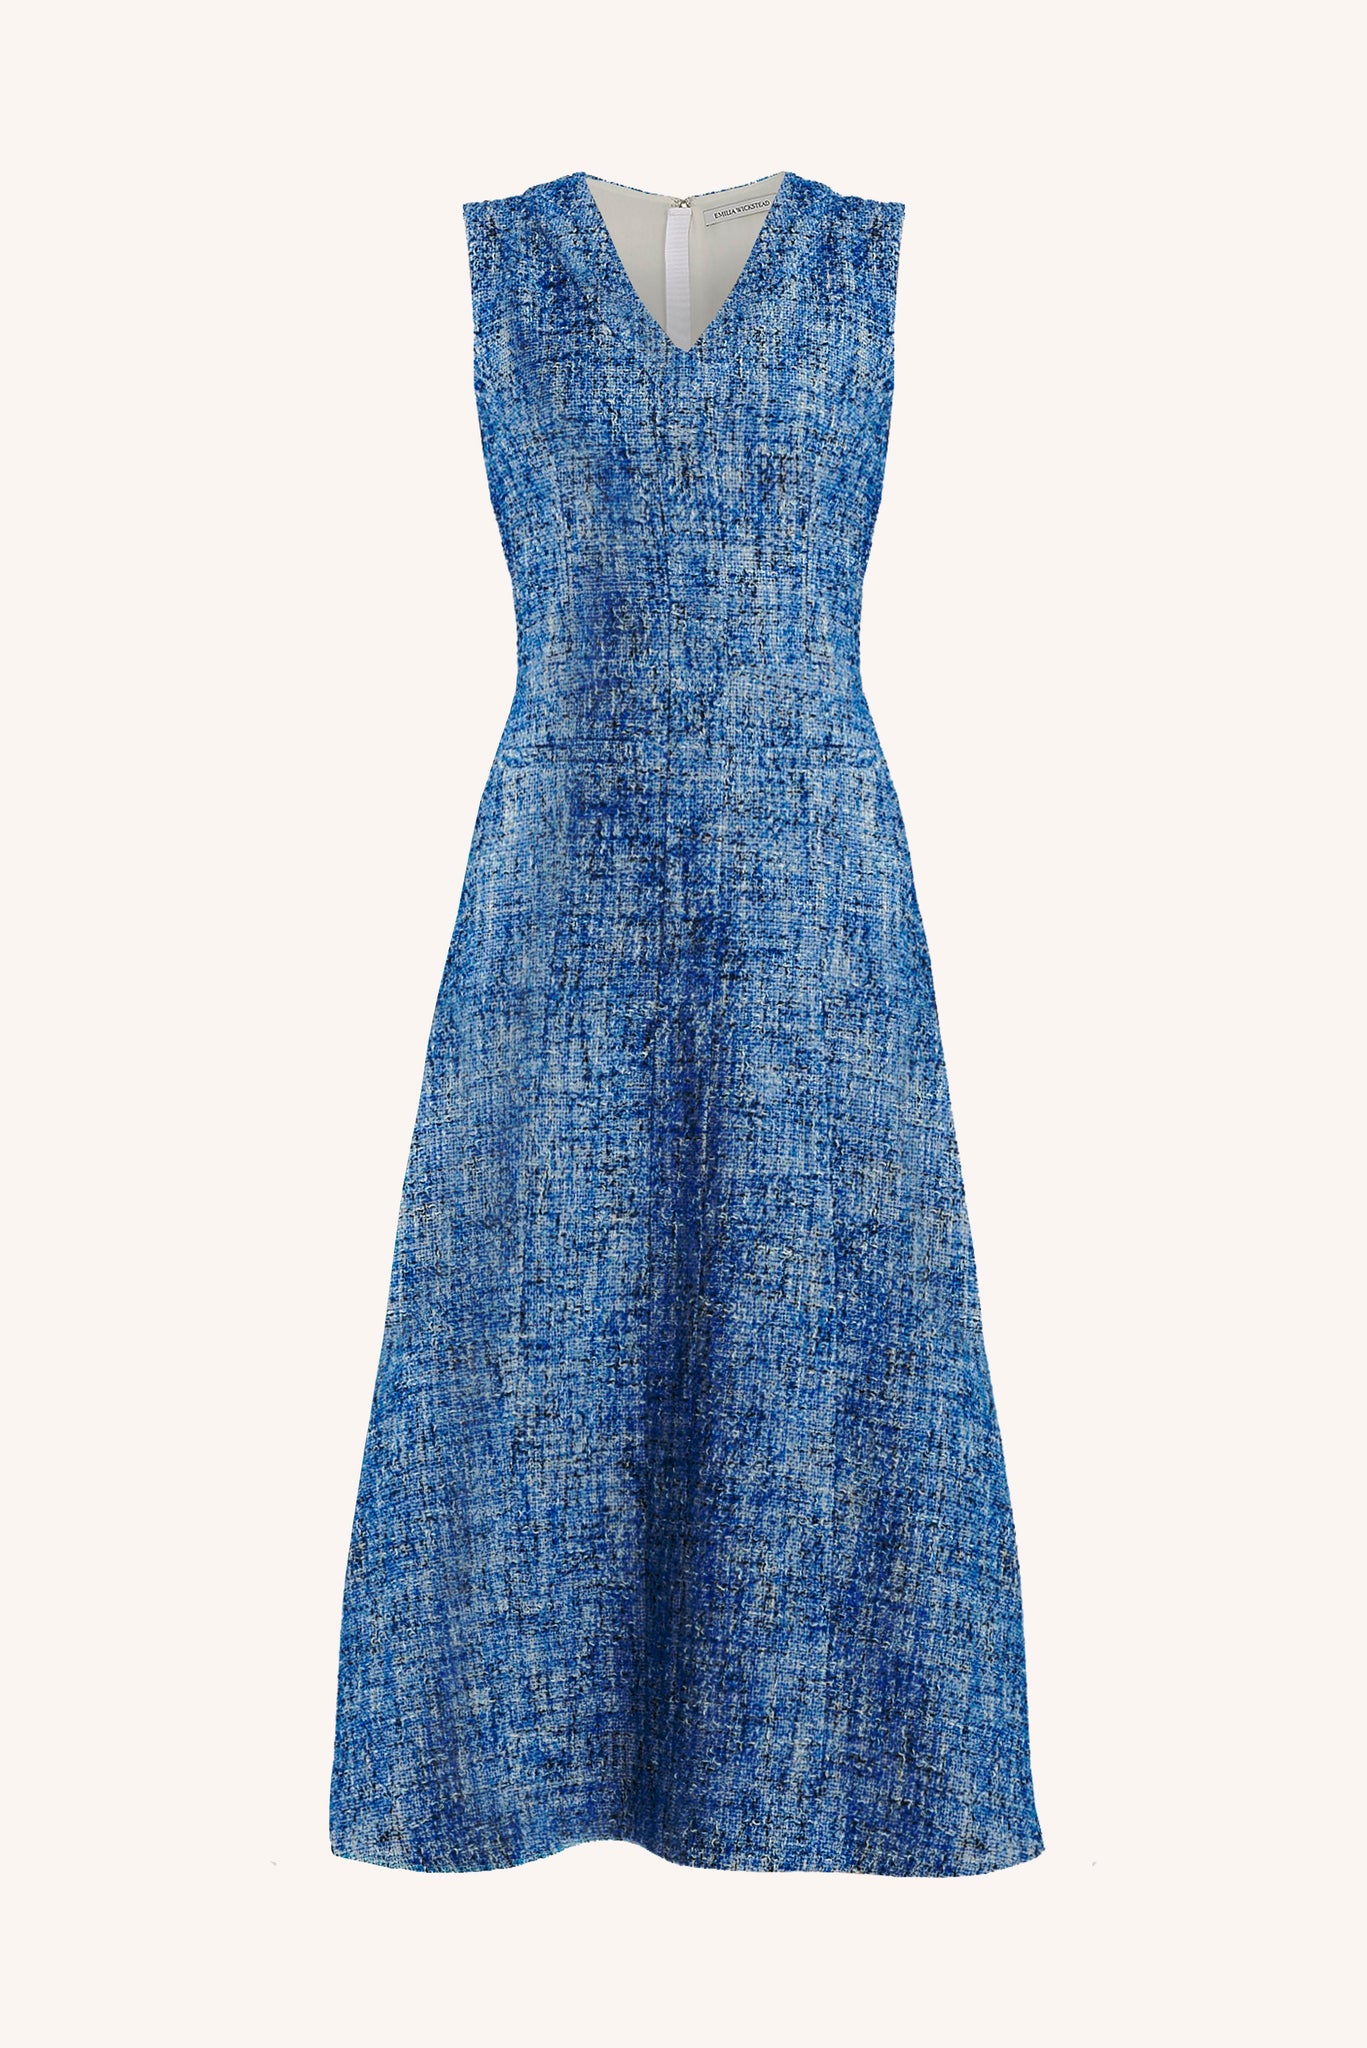 Mio Dress In Blue Cotton Tweed - Emilia Wickstead